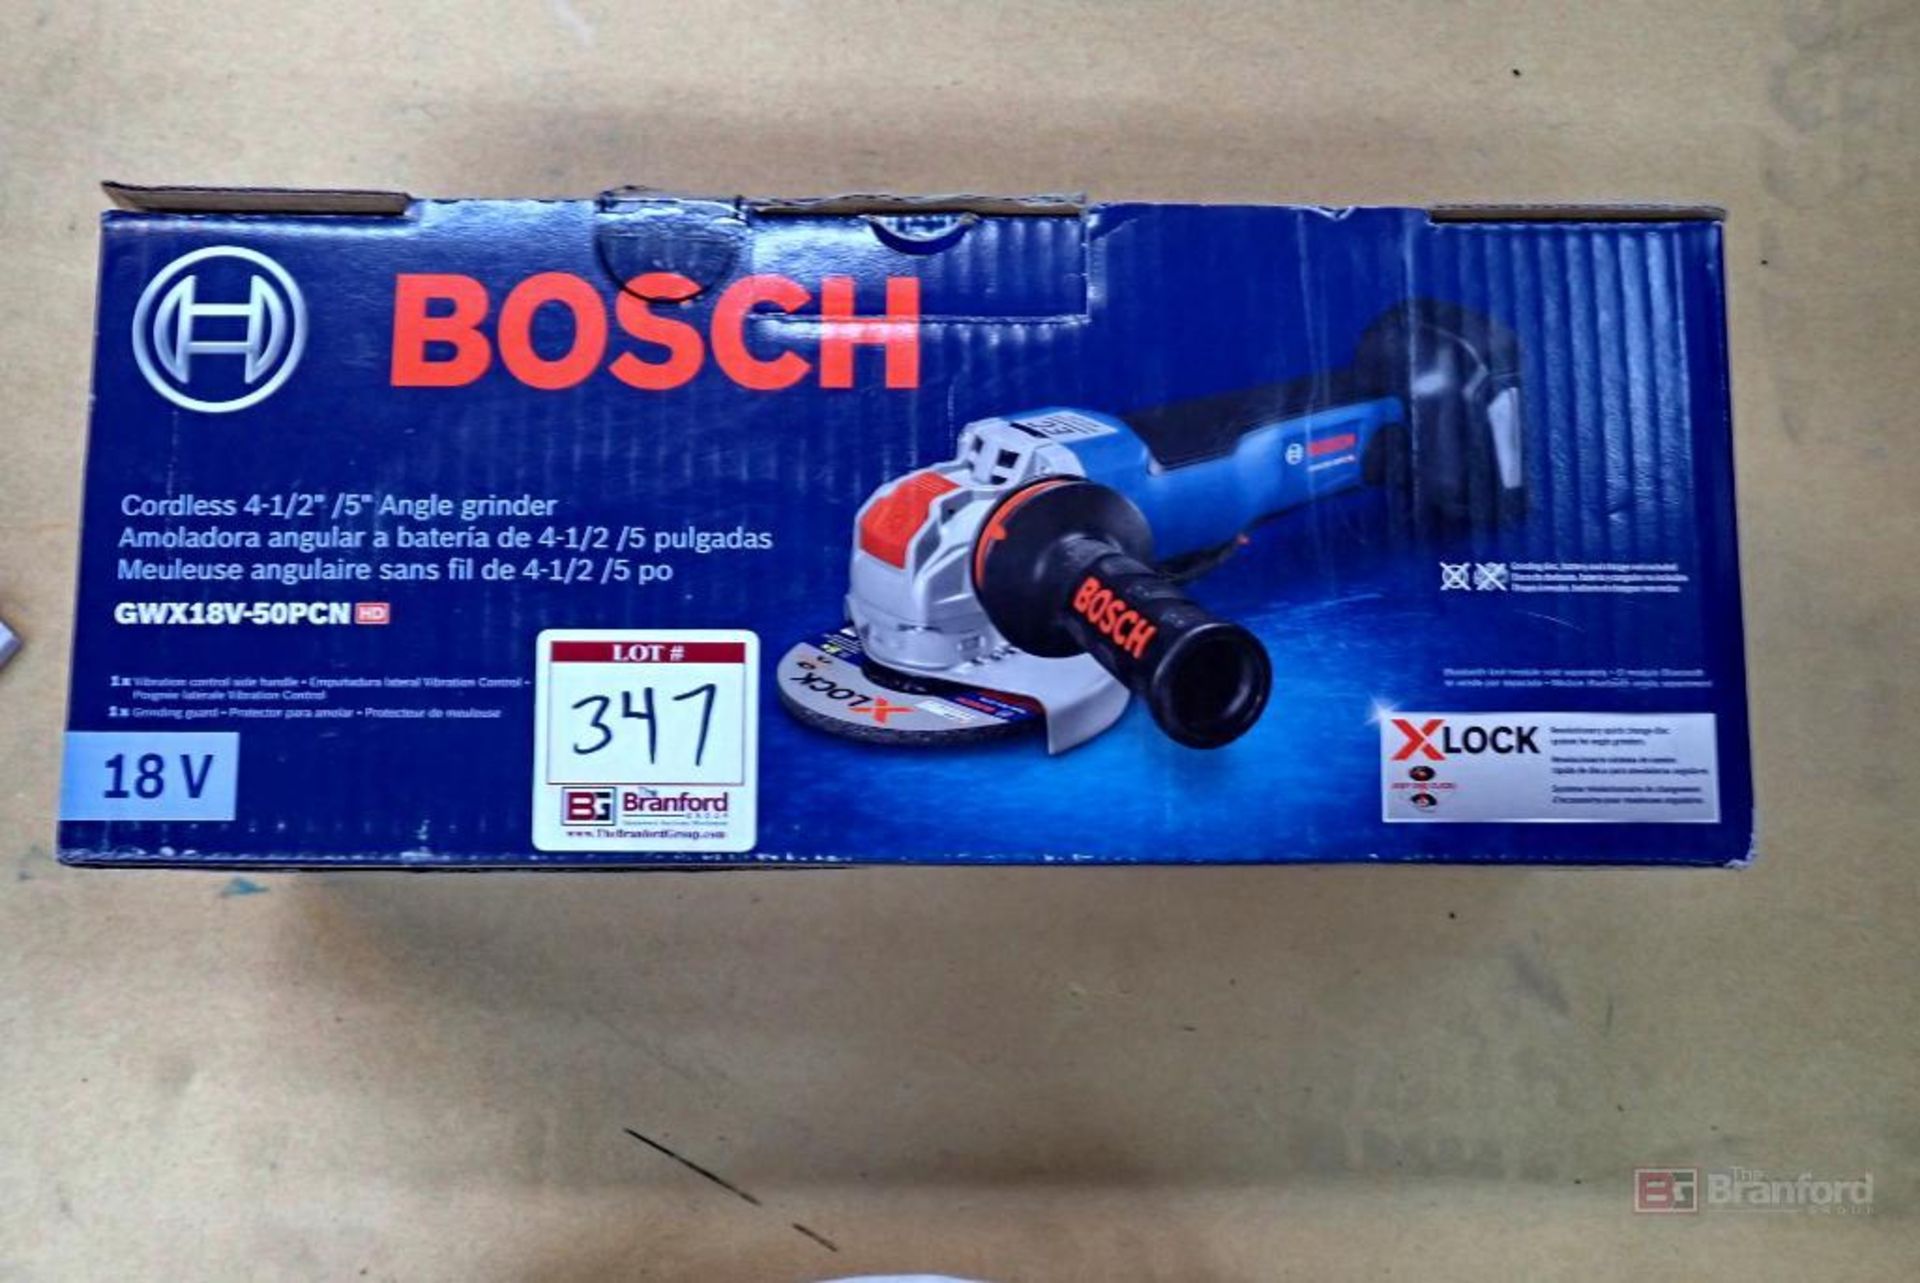 Bosch GWX18V-50PCN Cordless 4-1/2" / 5" Angle Grinder - Image 3 of 6